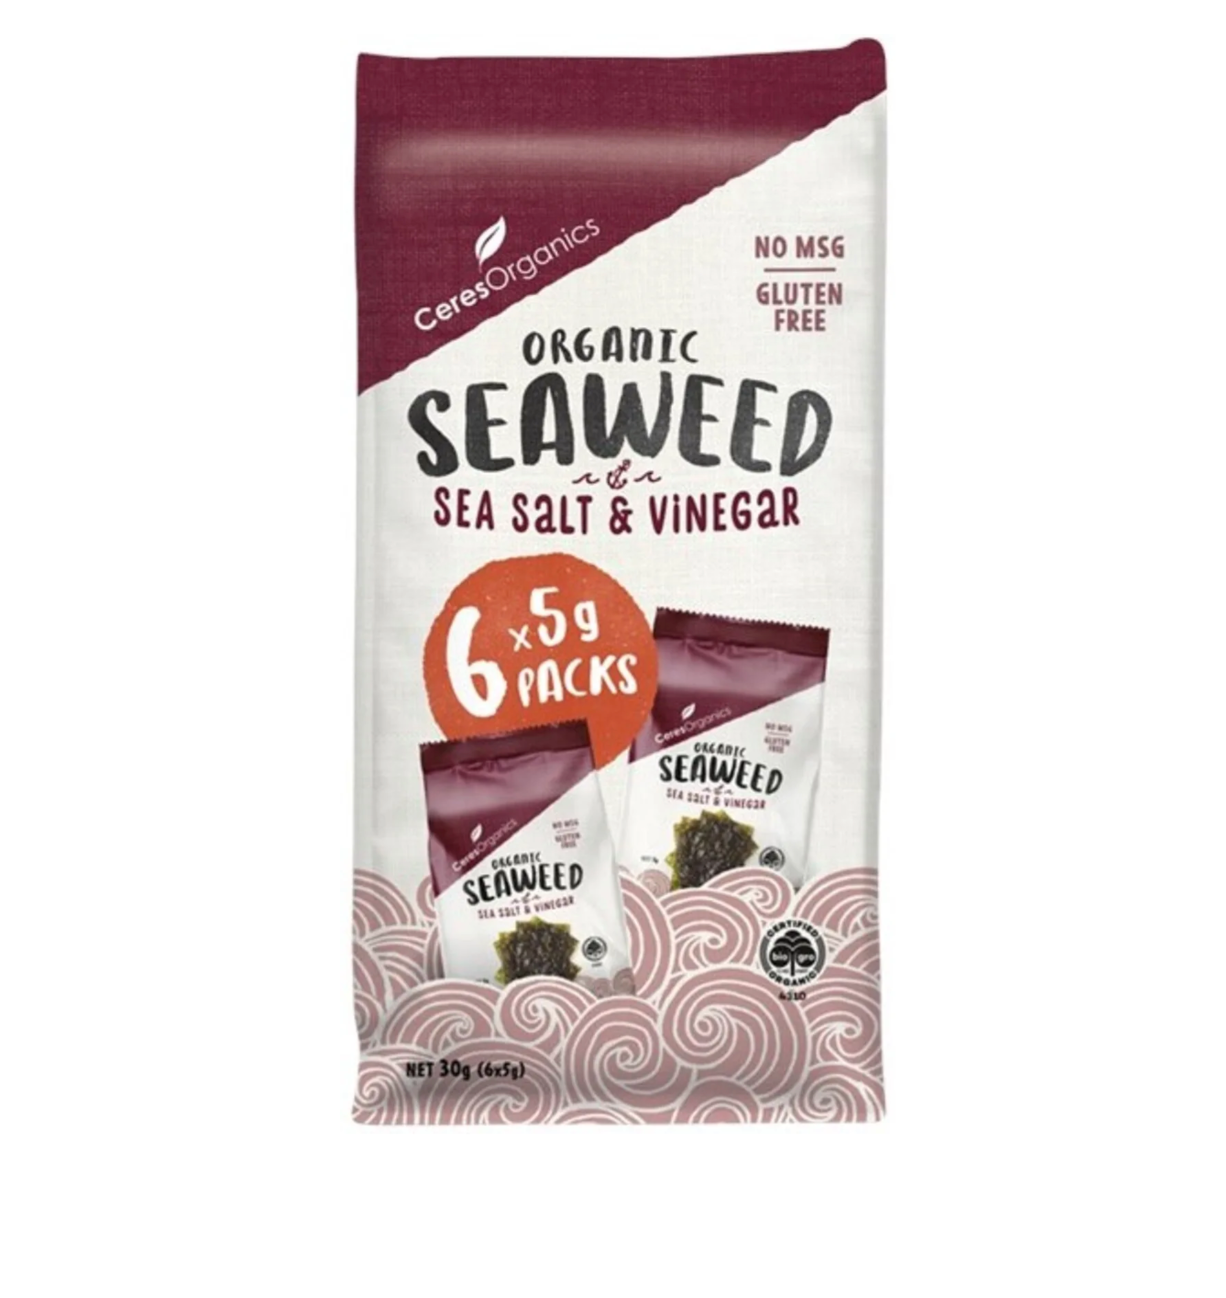 Sea Salt & Vinegar Seaweed Snack Multi Pack 6x5g - Ceres Organics